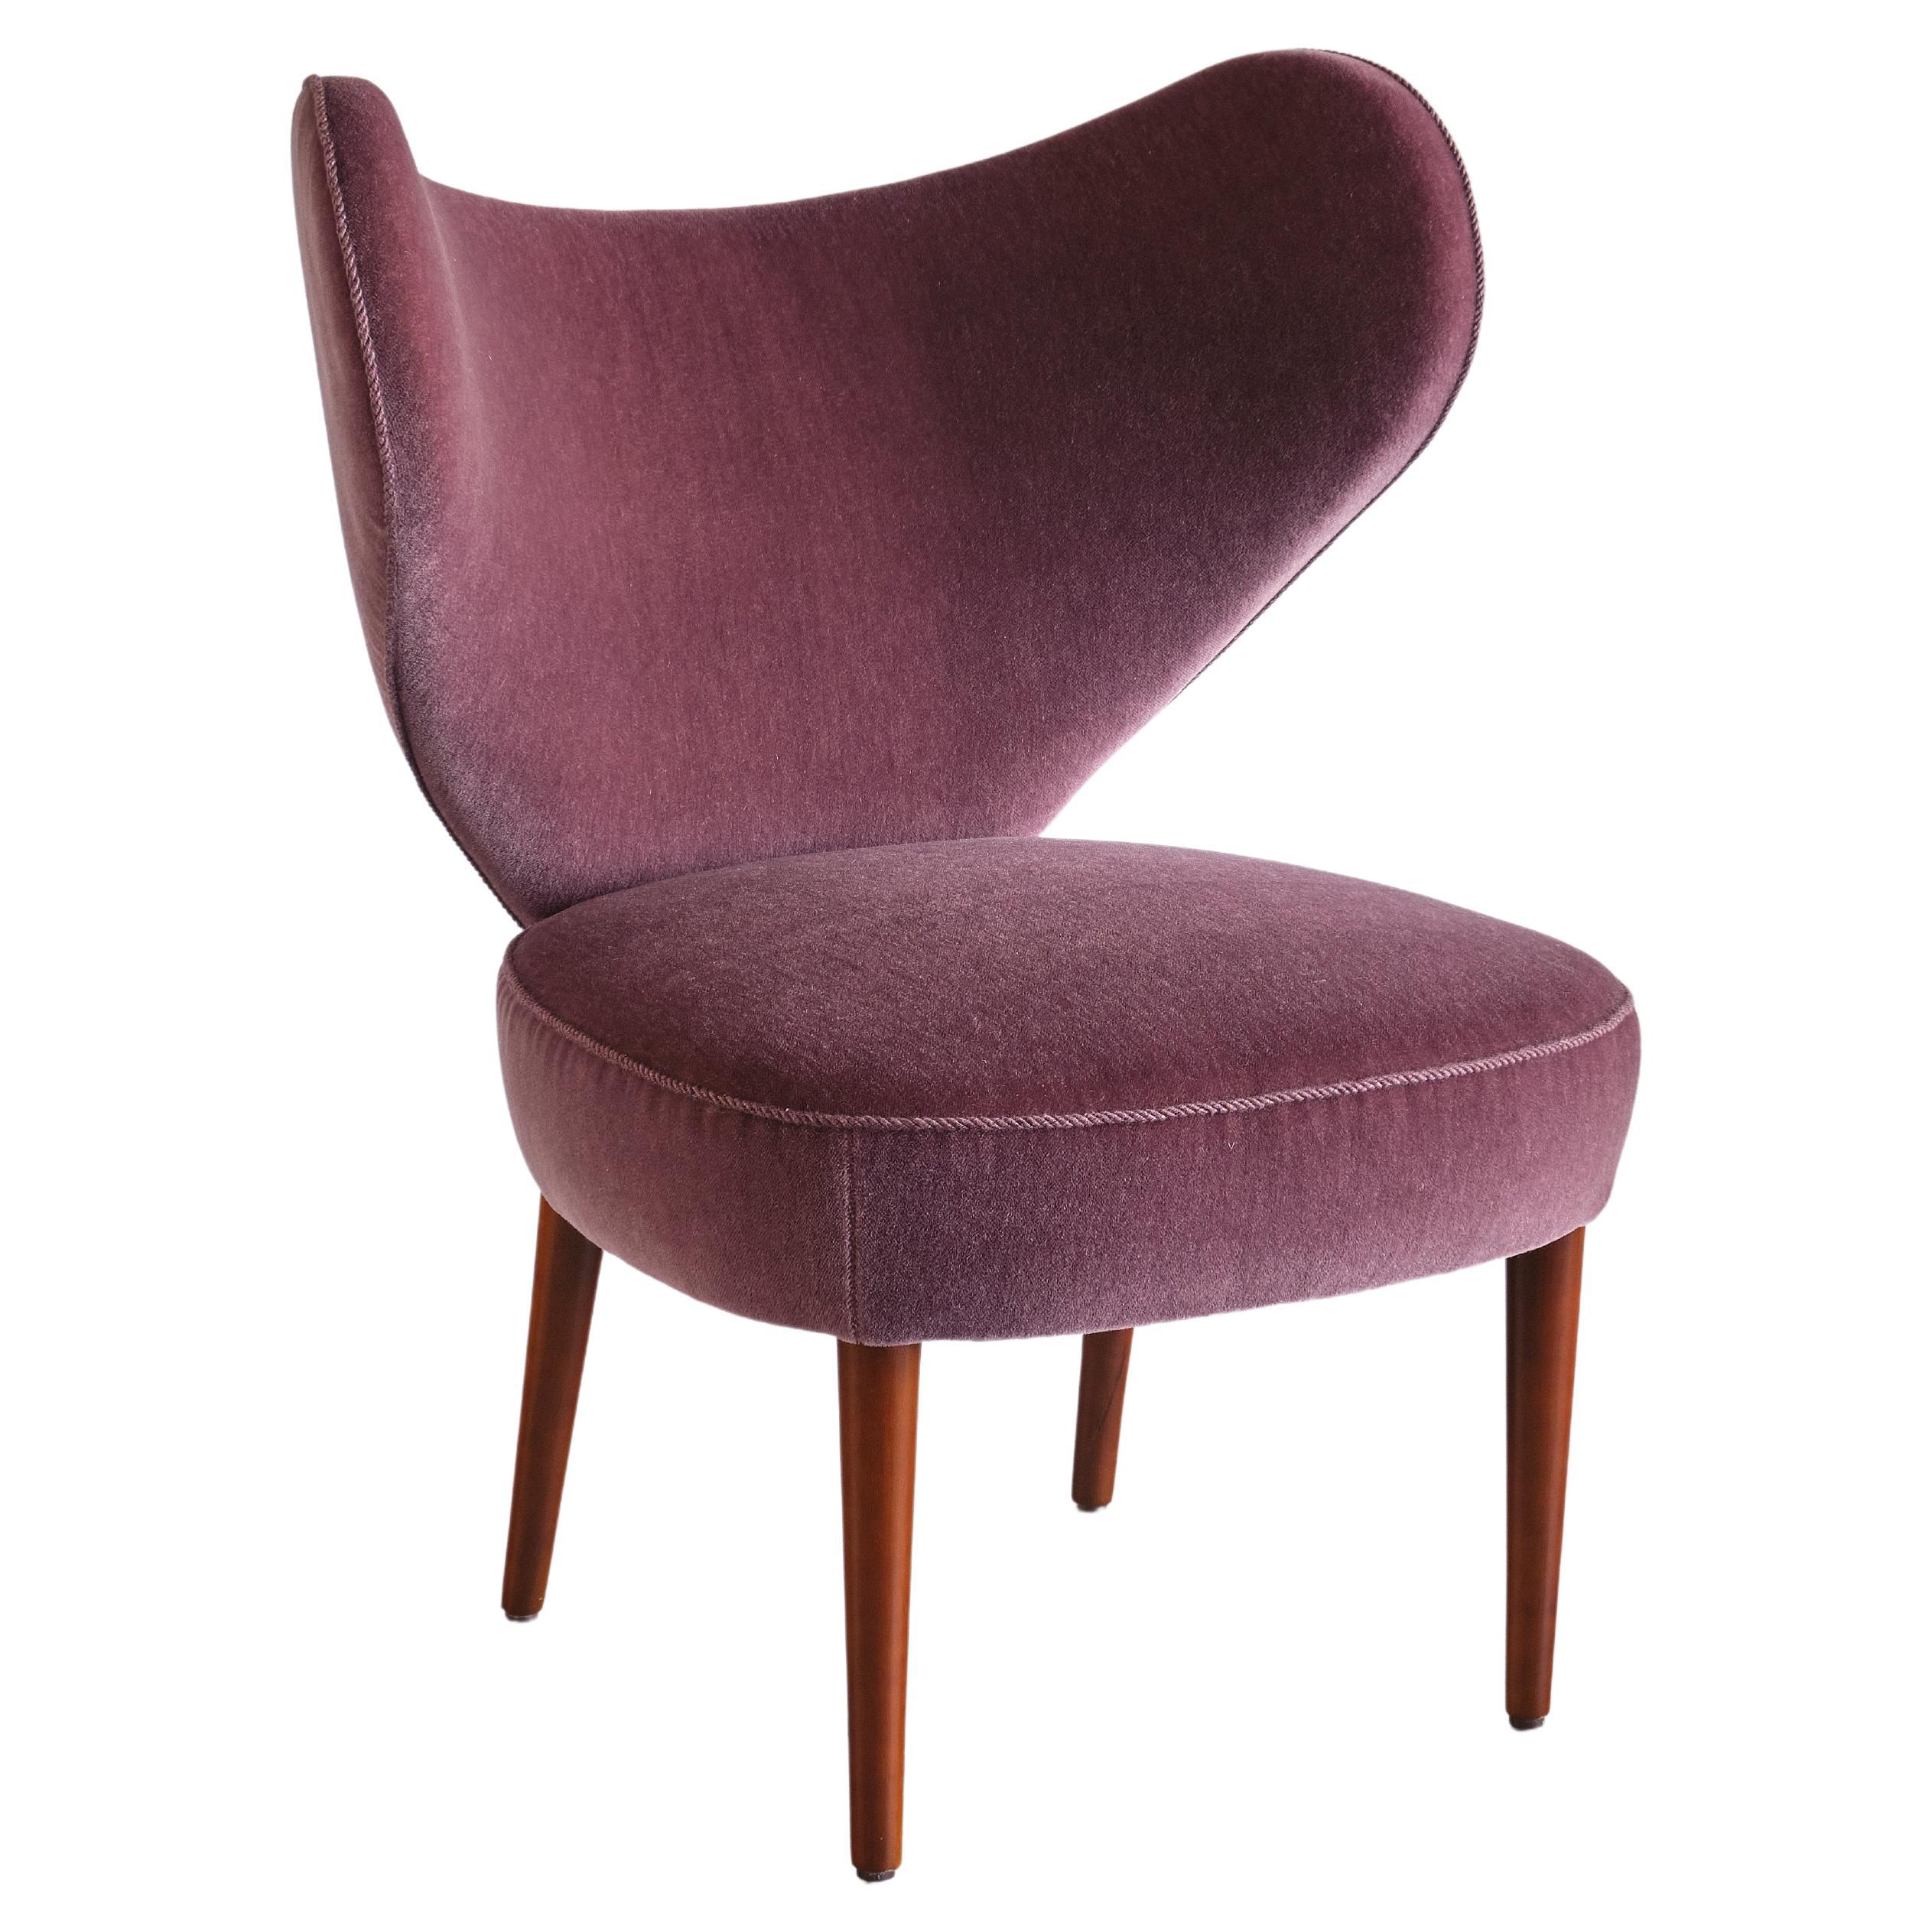 Exceptional 'Heart' Chair in Purple Mohair, Brøndbyøster Møbel, Denmark, 1953 For Sale